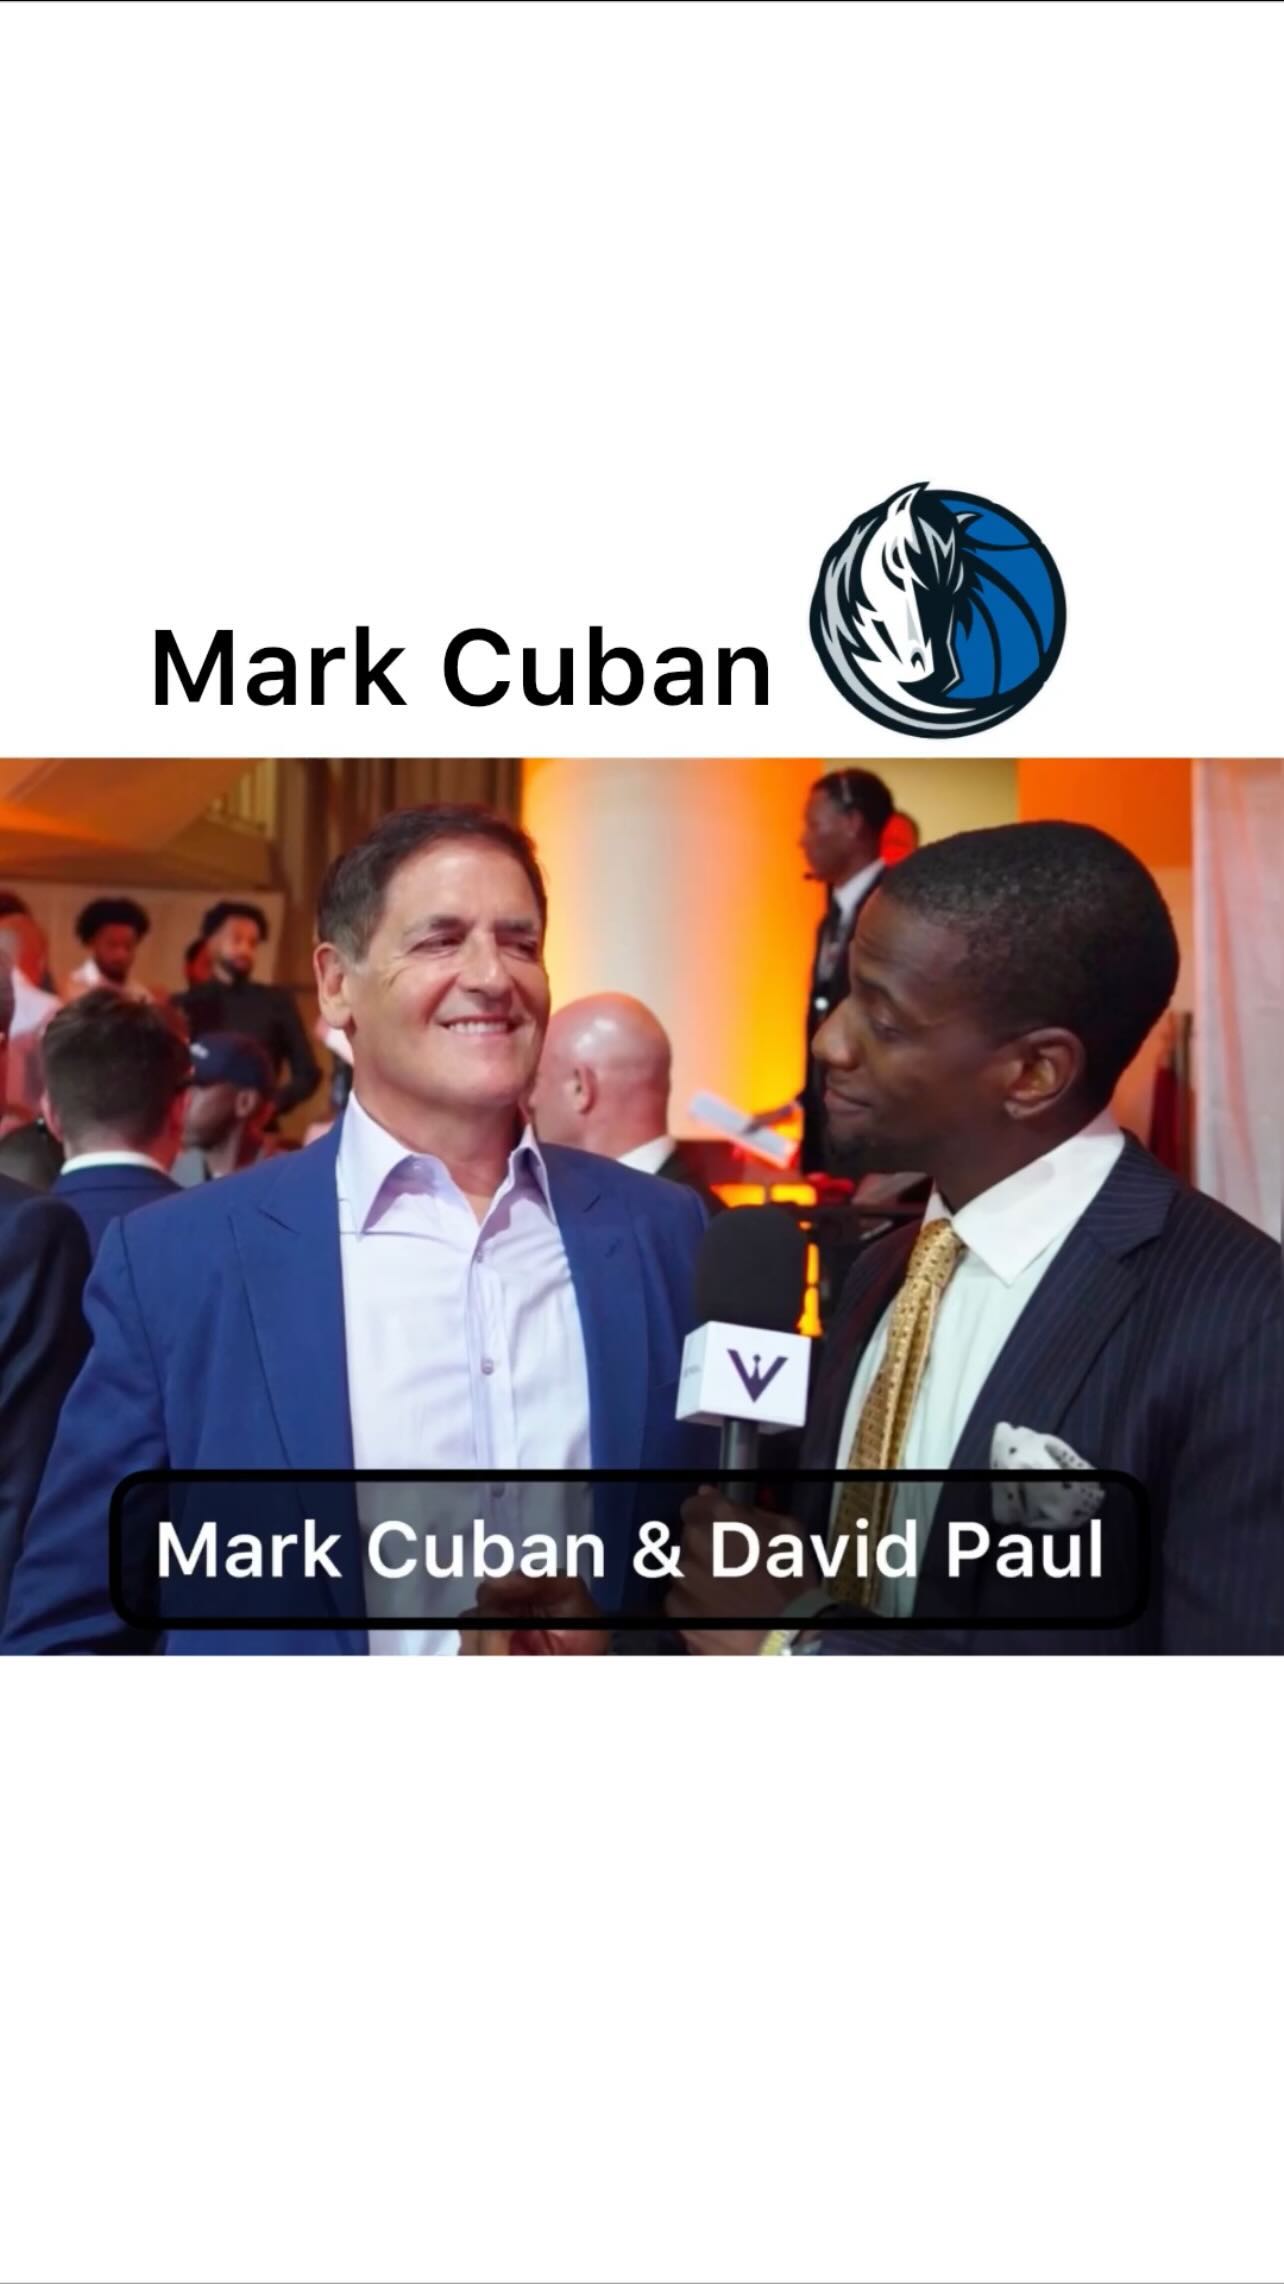 Mark Cuban being interviewed by David Paul